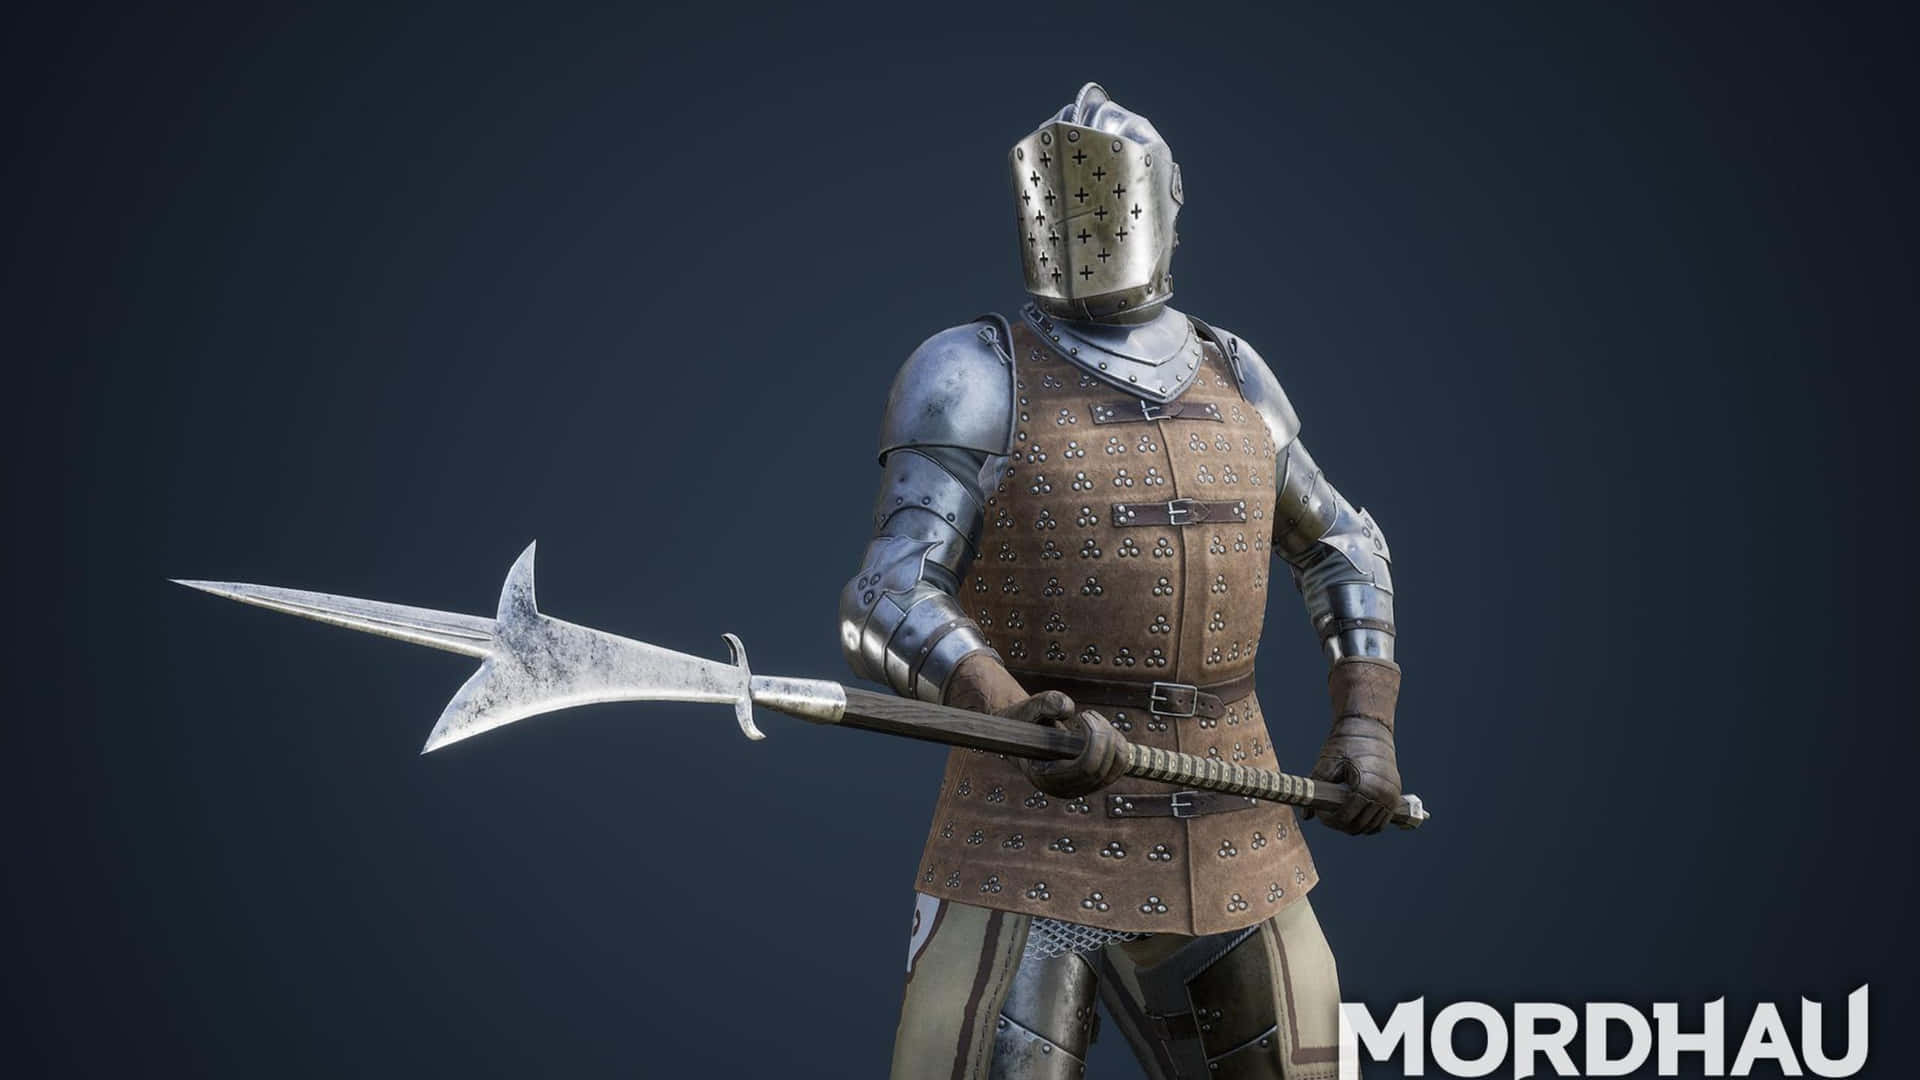 1440p Mordhau Medieval Spear Weapon Background